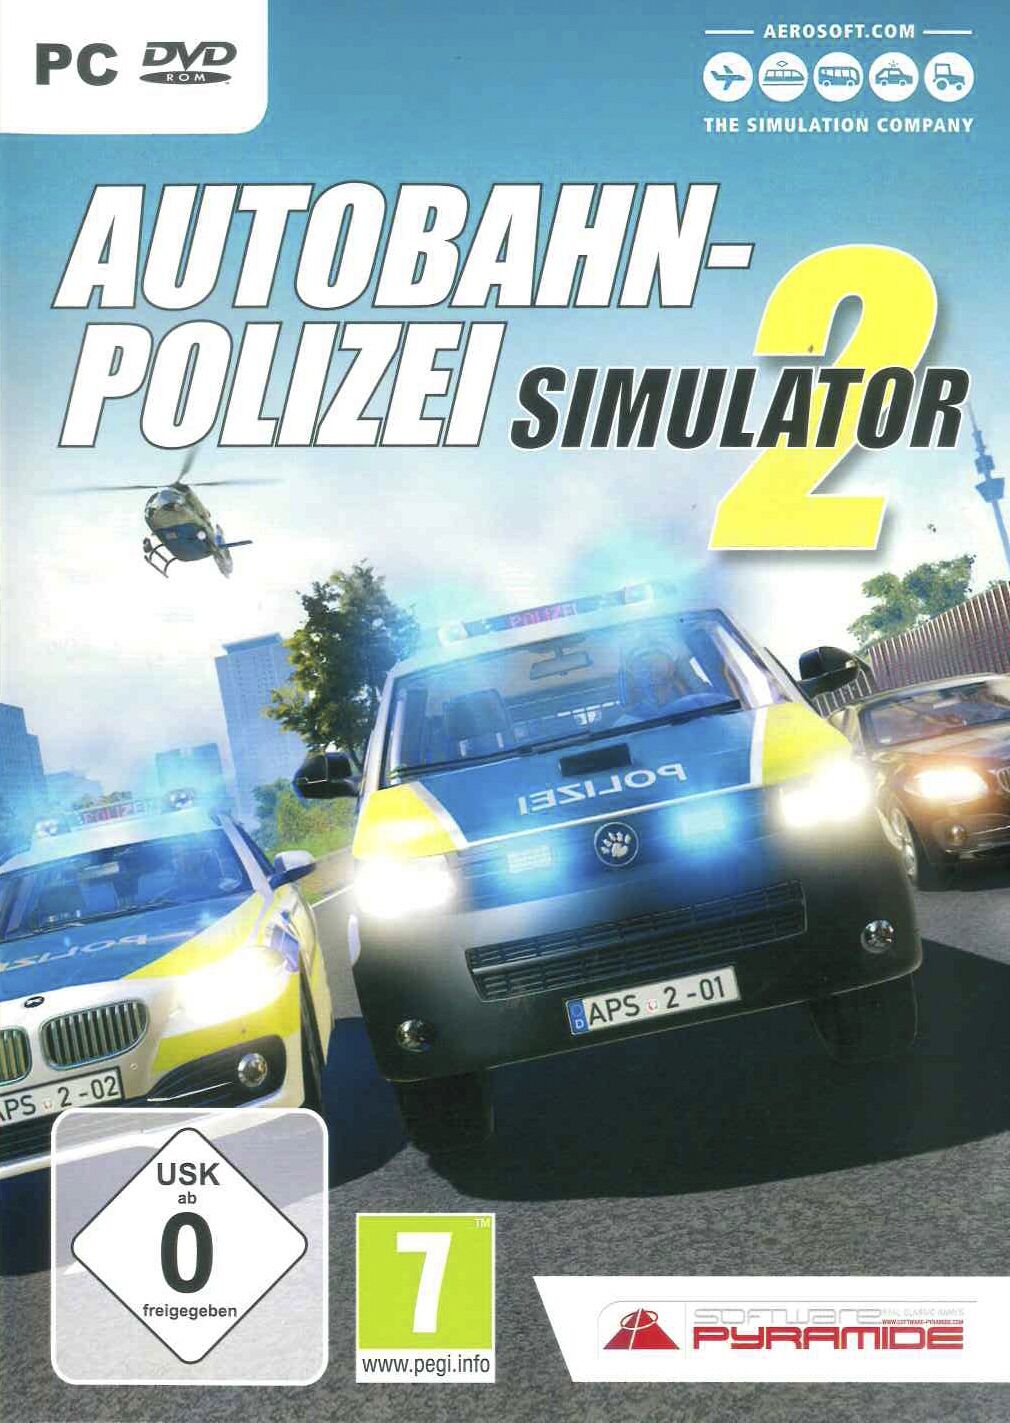 Aerosoft - Autobahn-Polizei Simulator 2 [DVD] [PC] (D)